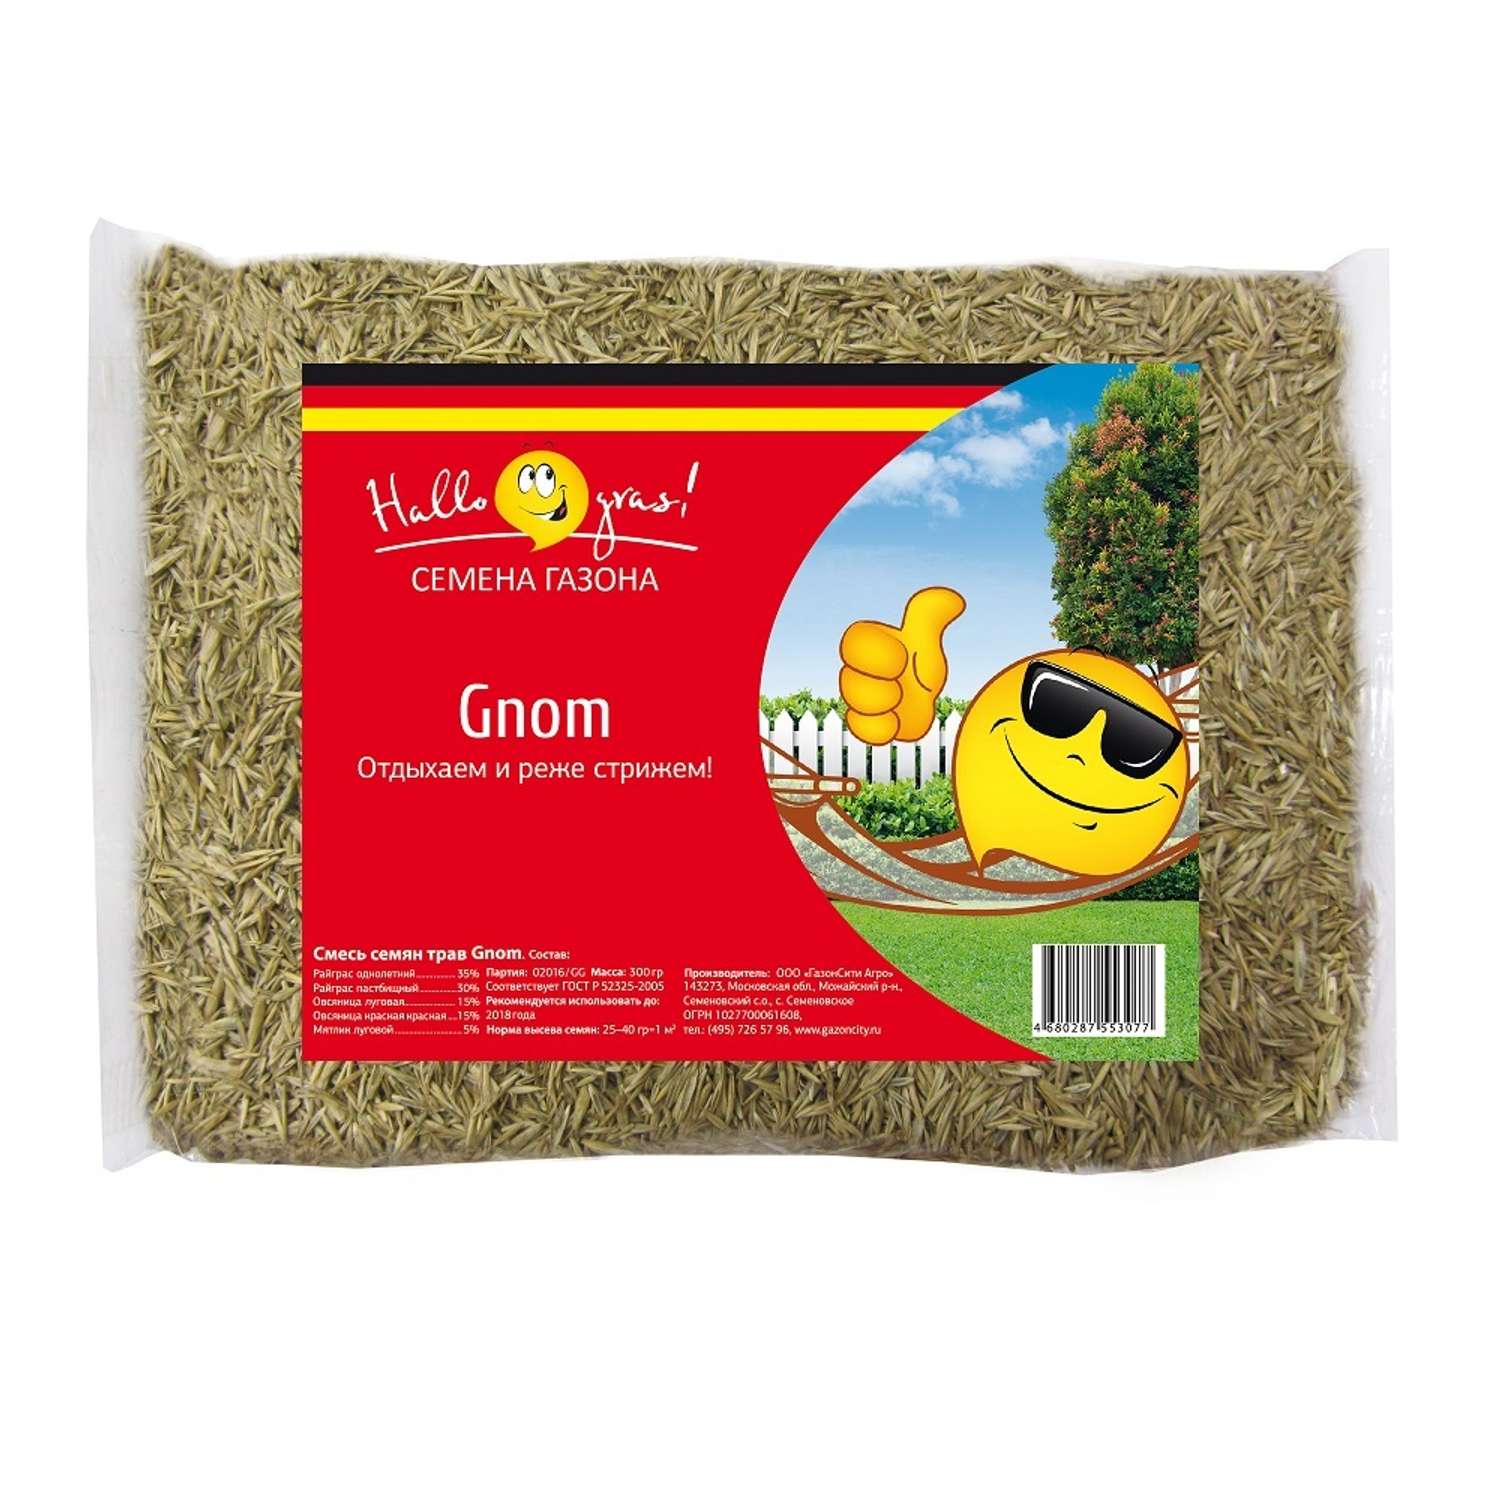 Семена газонных трав Hallo Gras! Gnom gras 300г - фото 1